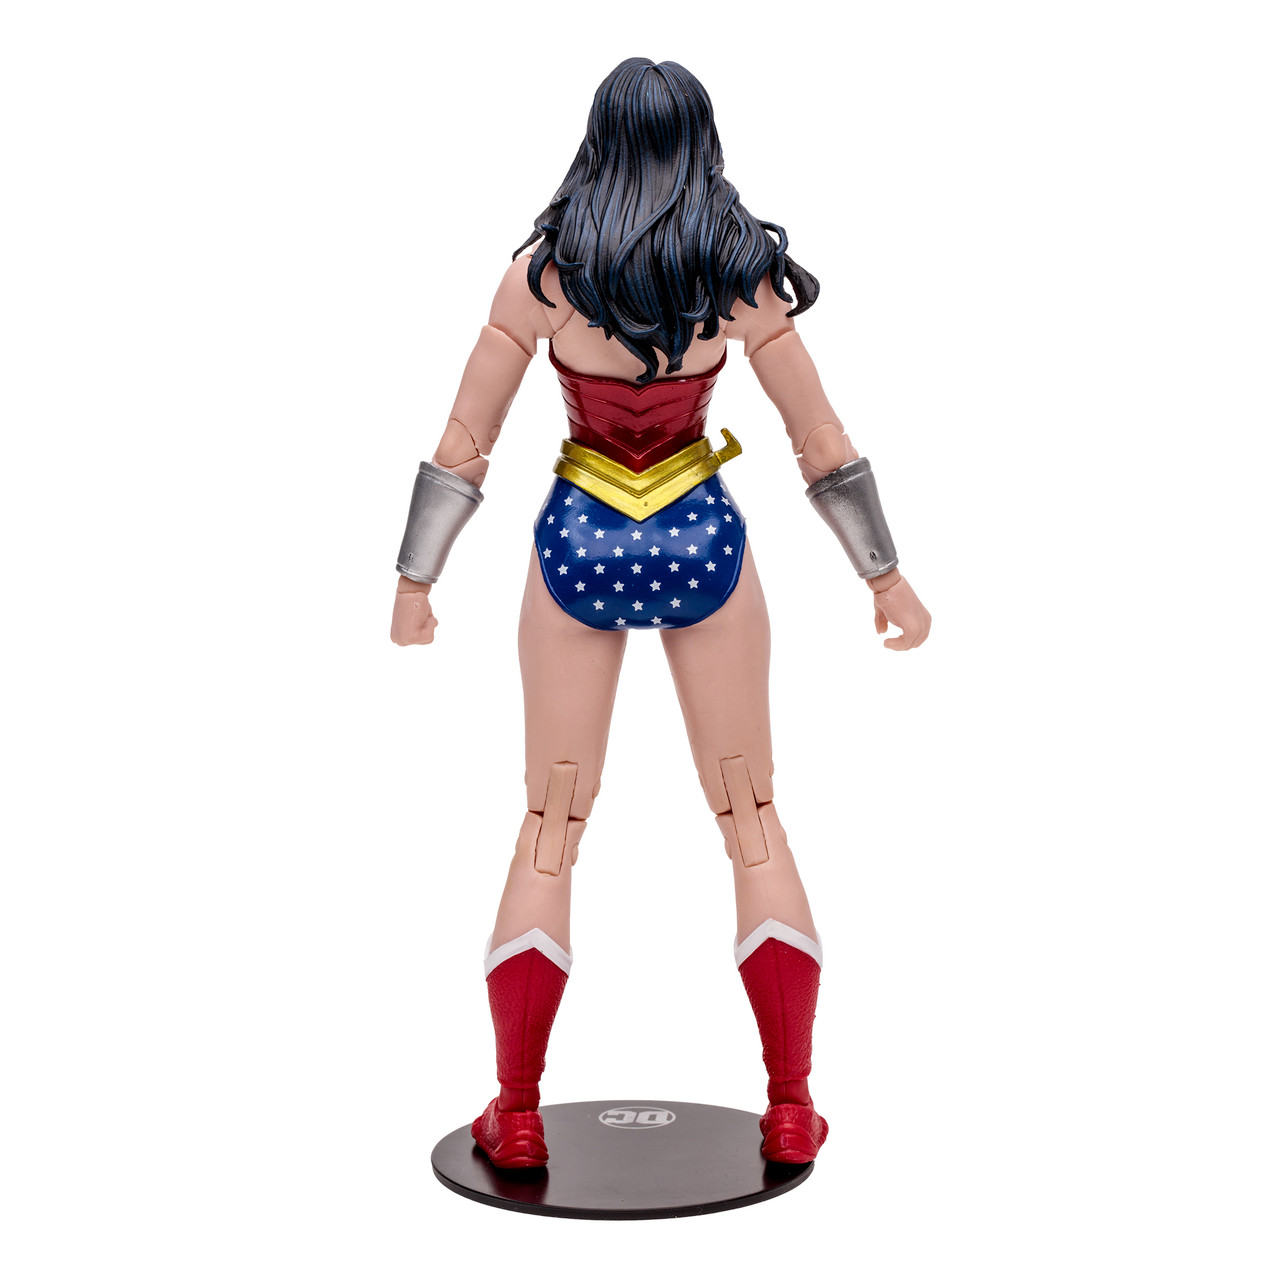 McFarlane Toys announces new Wonder Woman figure